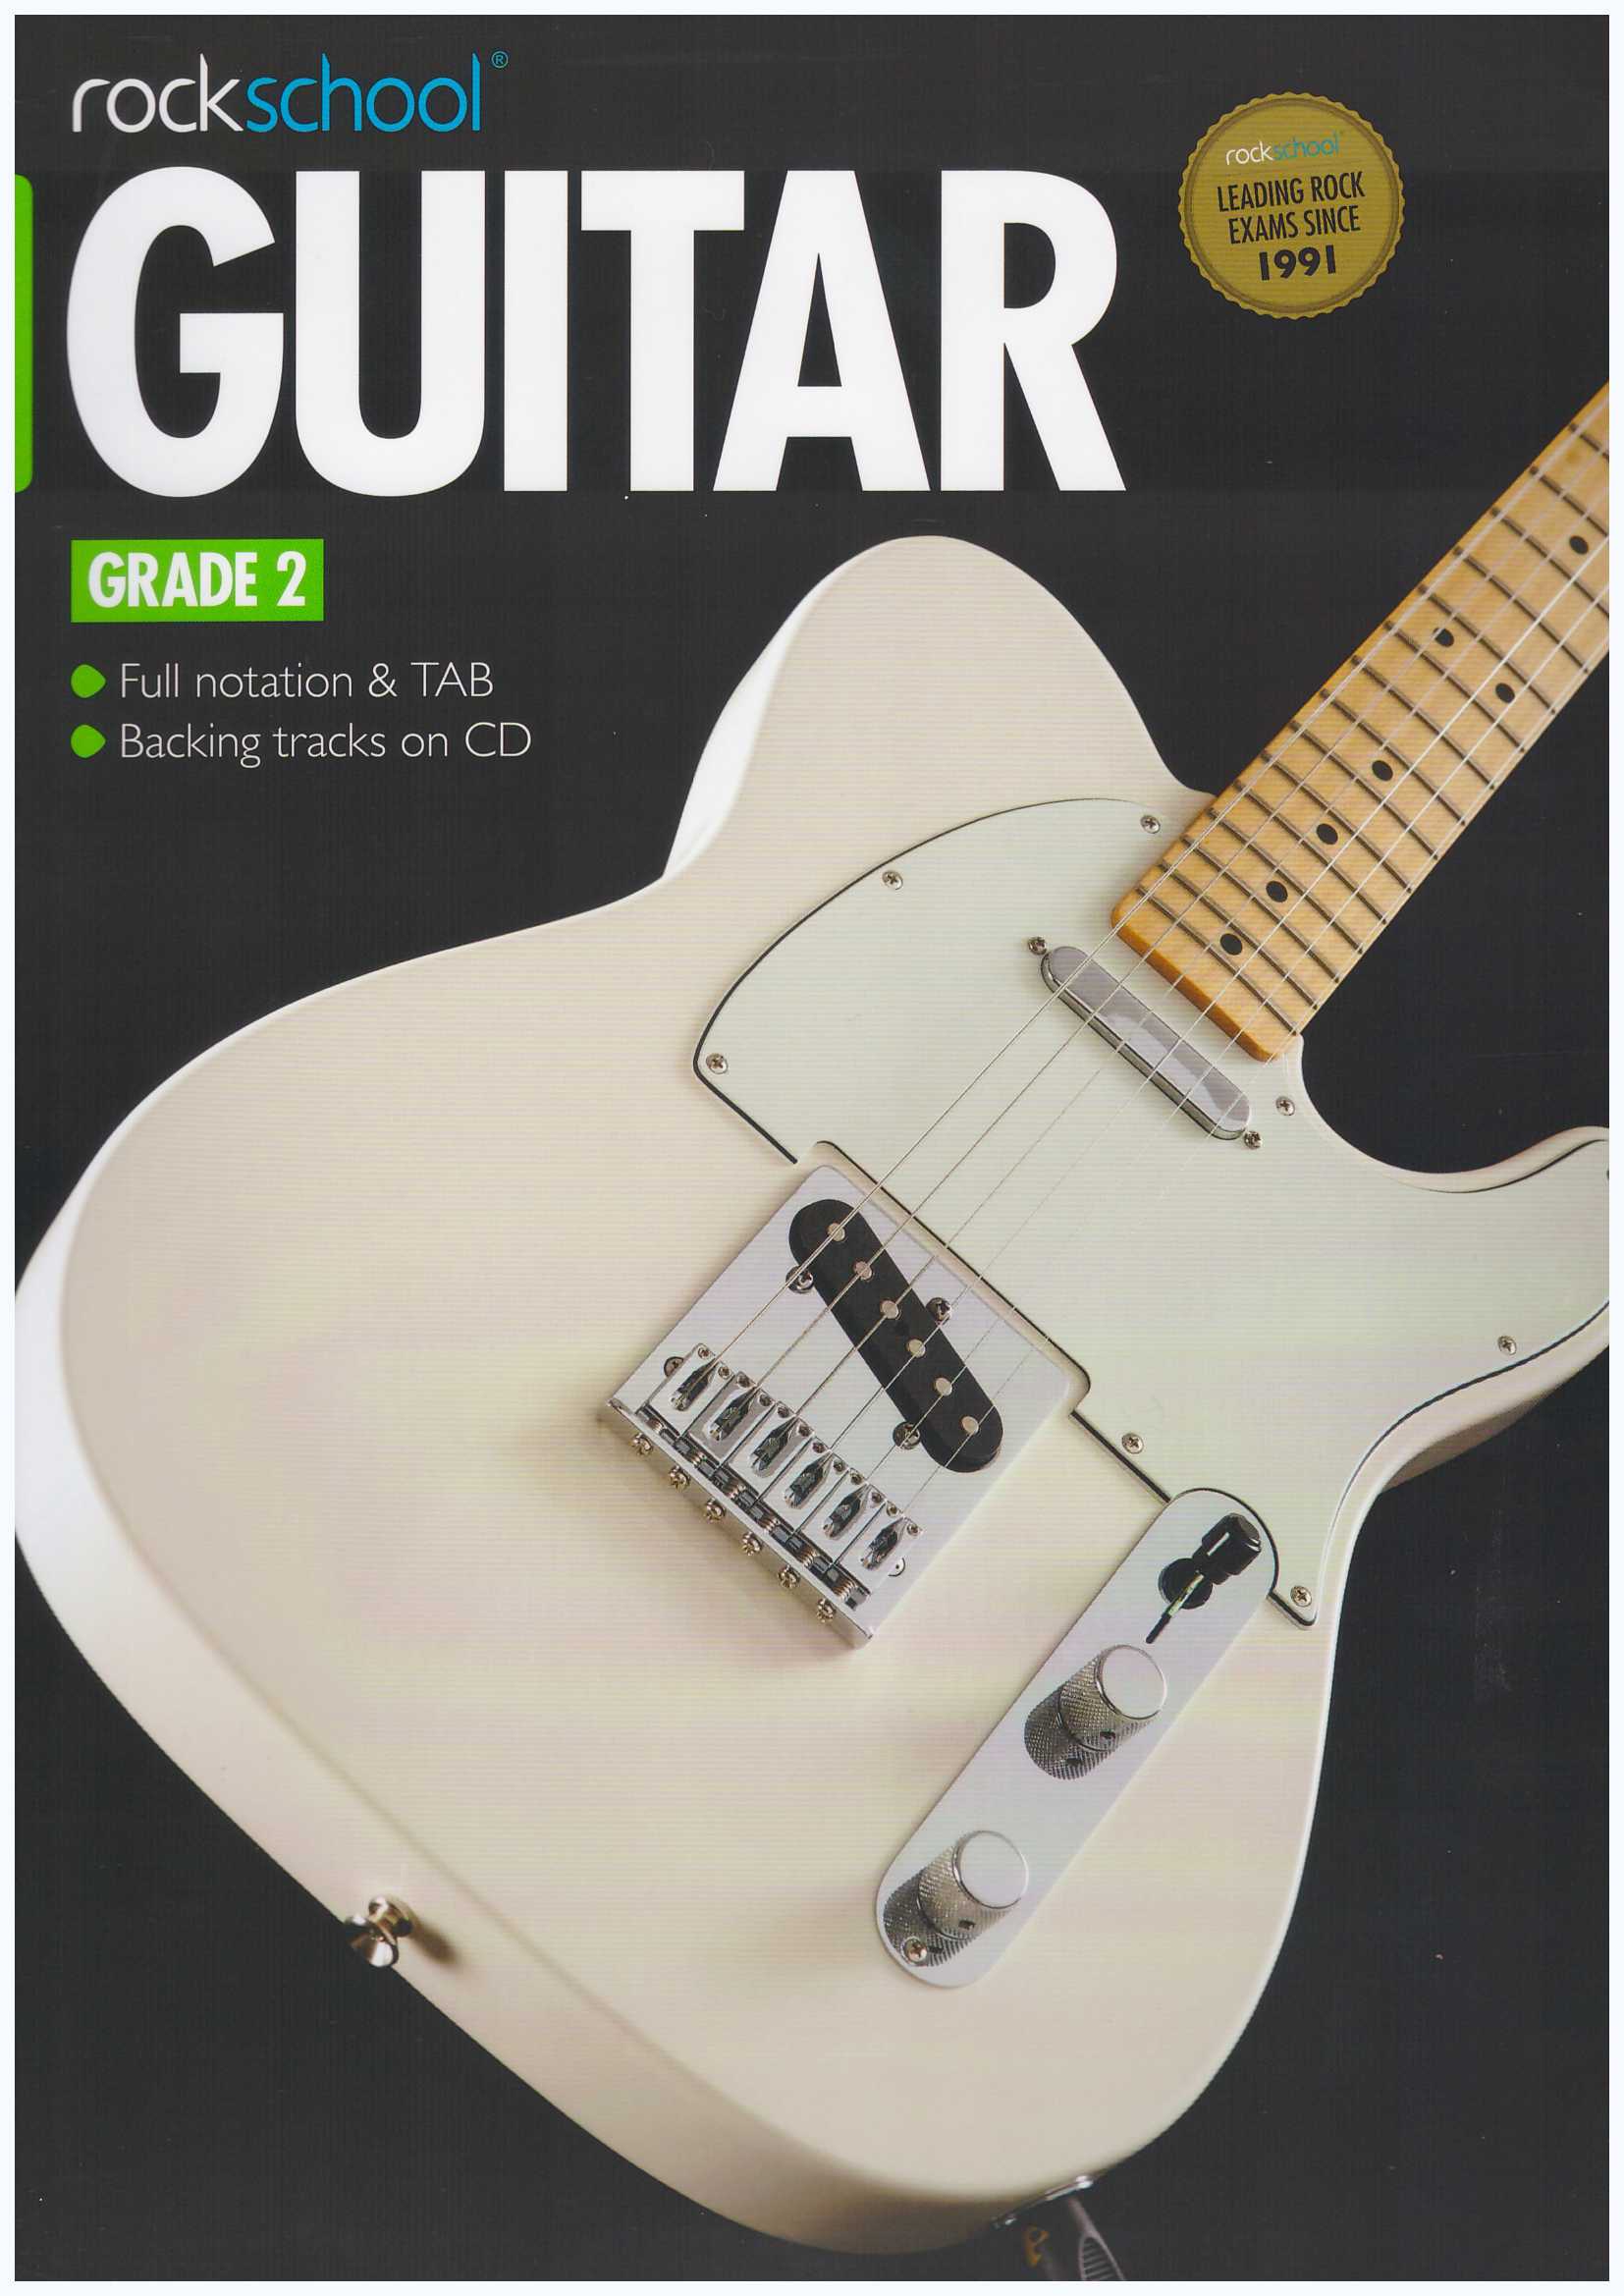 Rock School Guitar Grade 2 2012-2018 / Exam Book / Education Book / Material Book / Guitar Book / Gitar Book